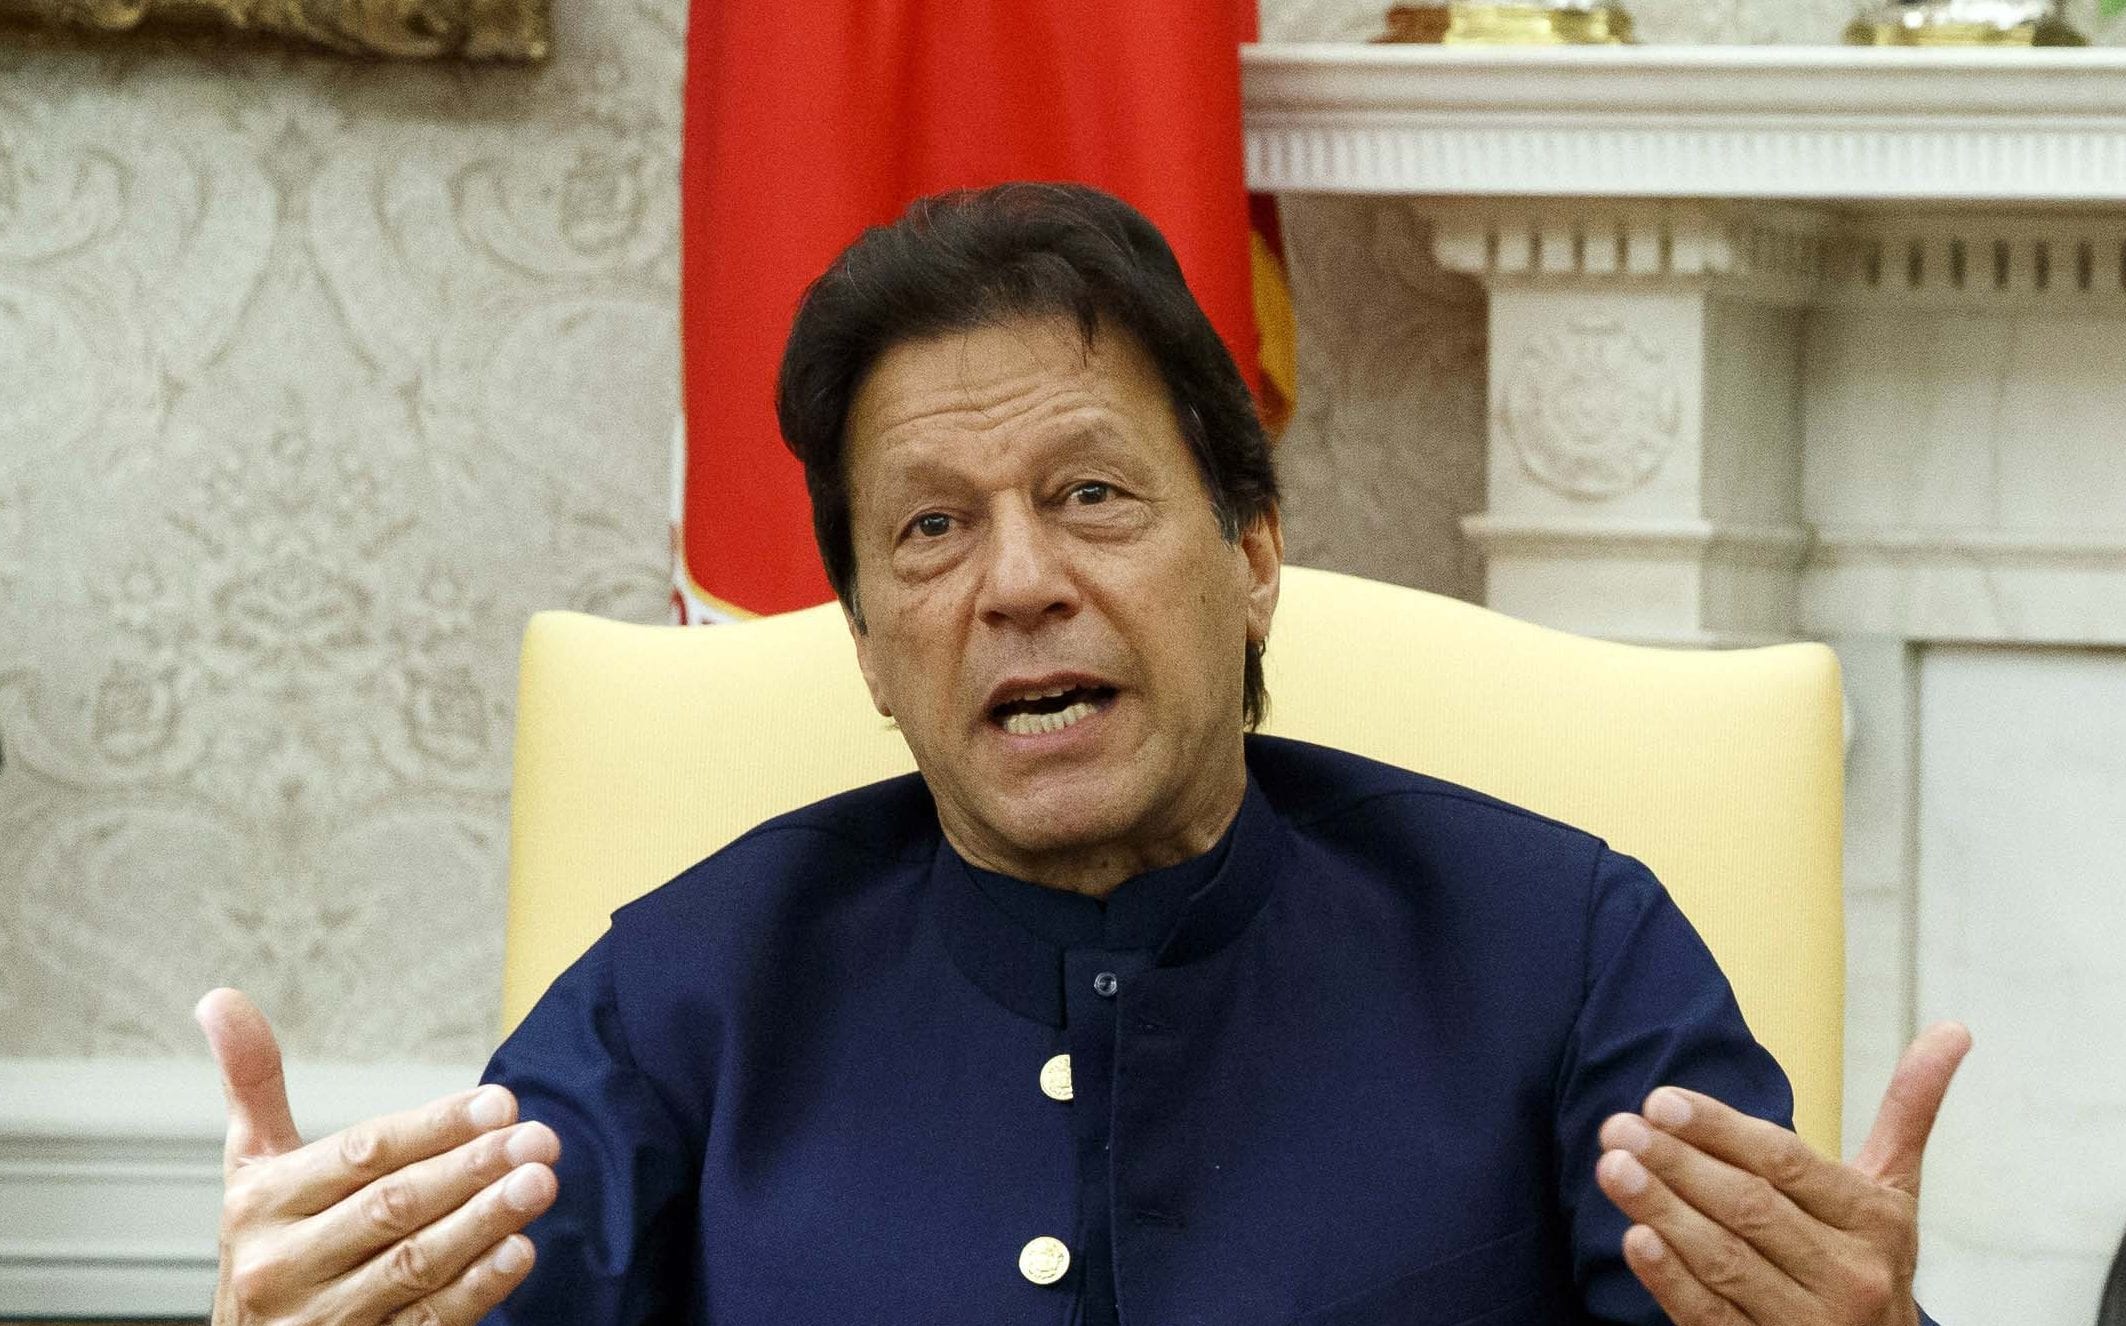 Struck an understanding with US, will bring Taliban for talks: Imran Khan